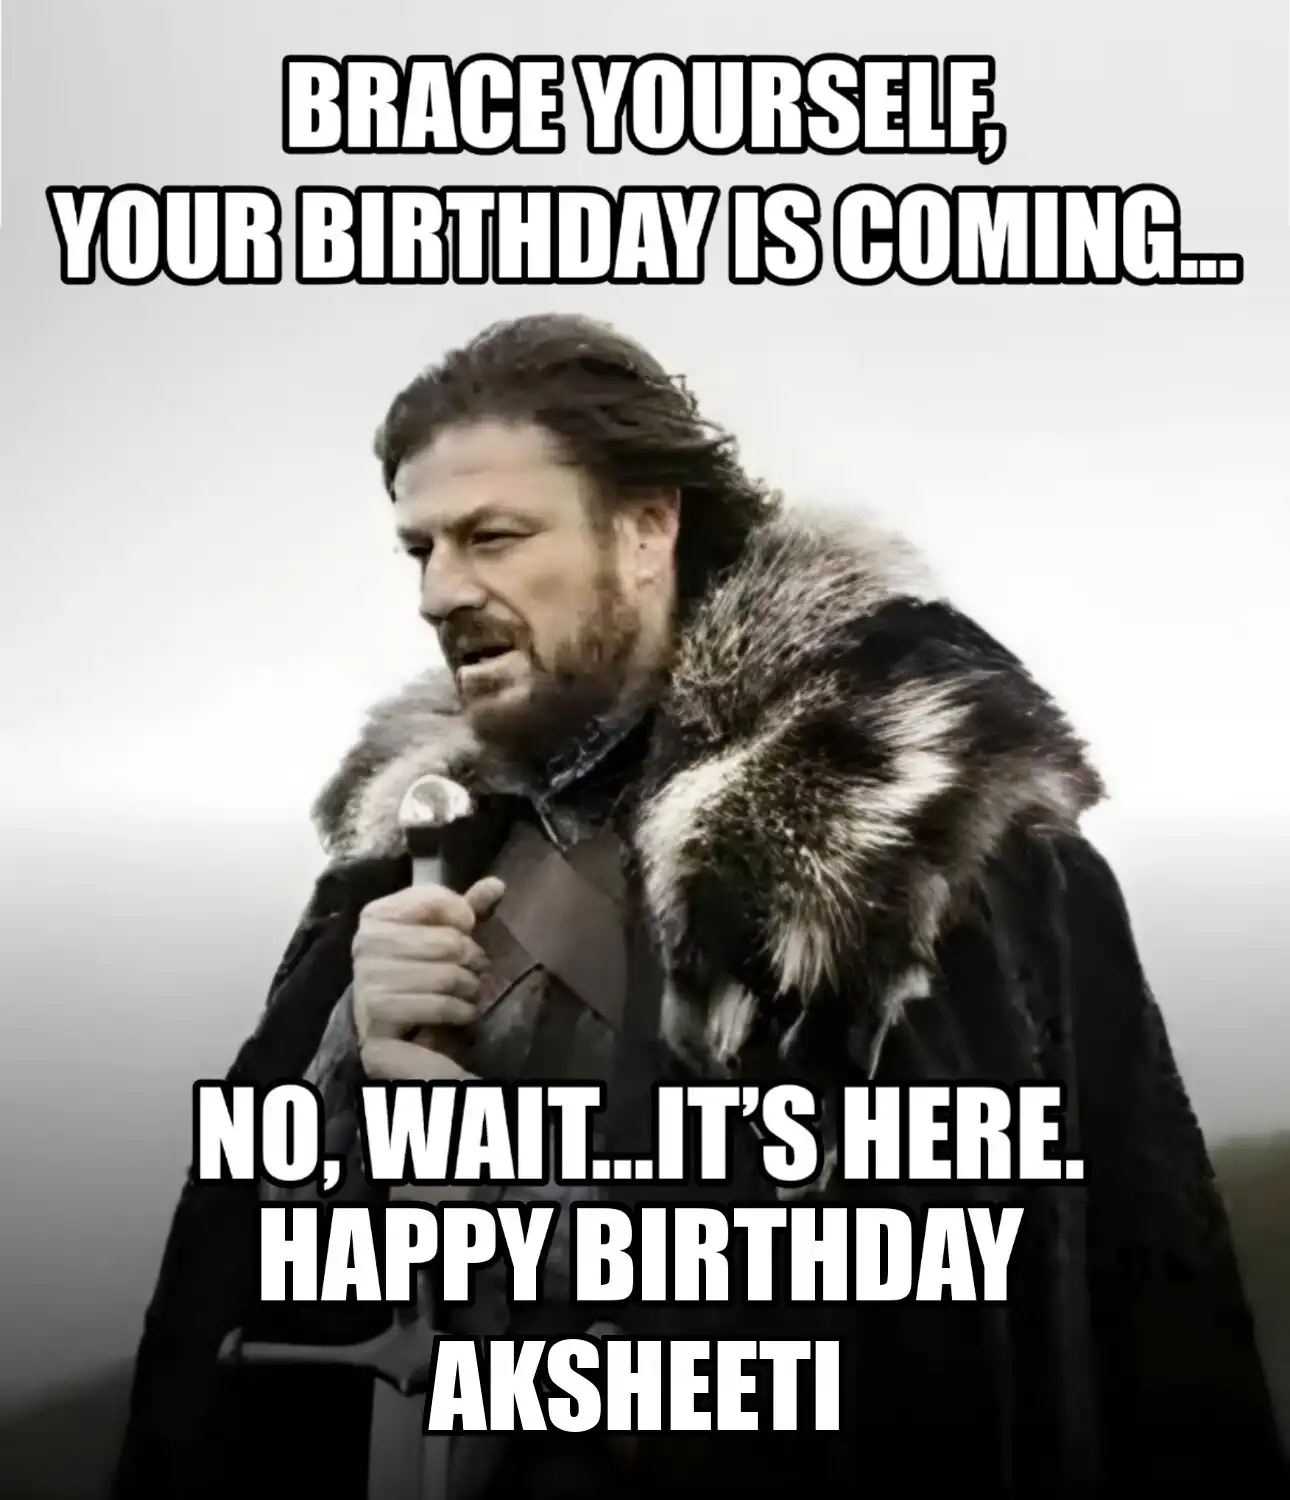 Happy Birthday Aksheeti Brace Yourself Your Birthday Is Coming Meme